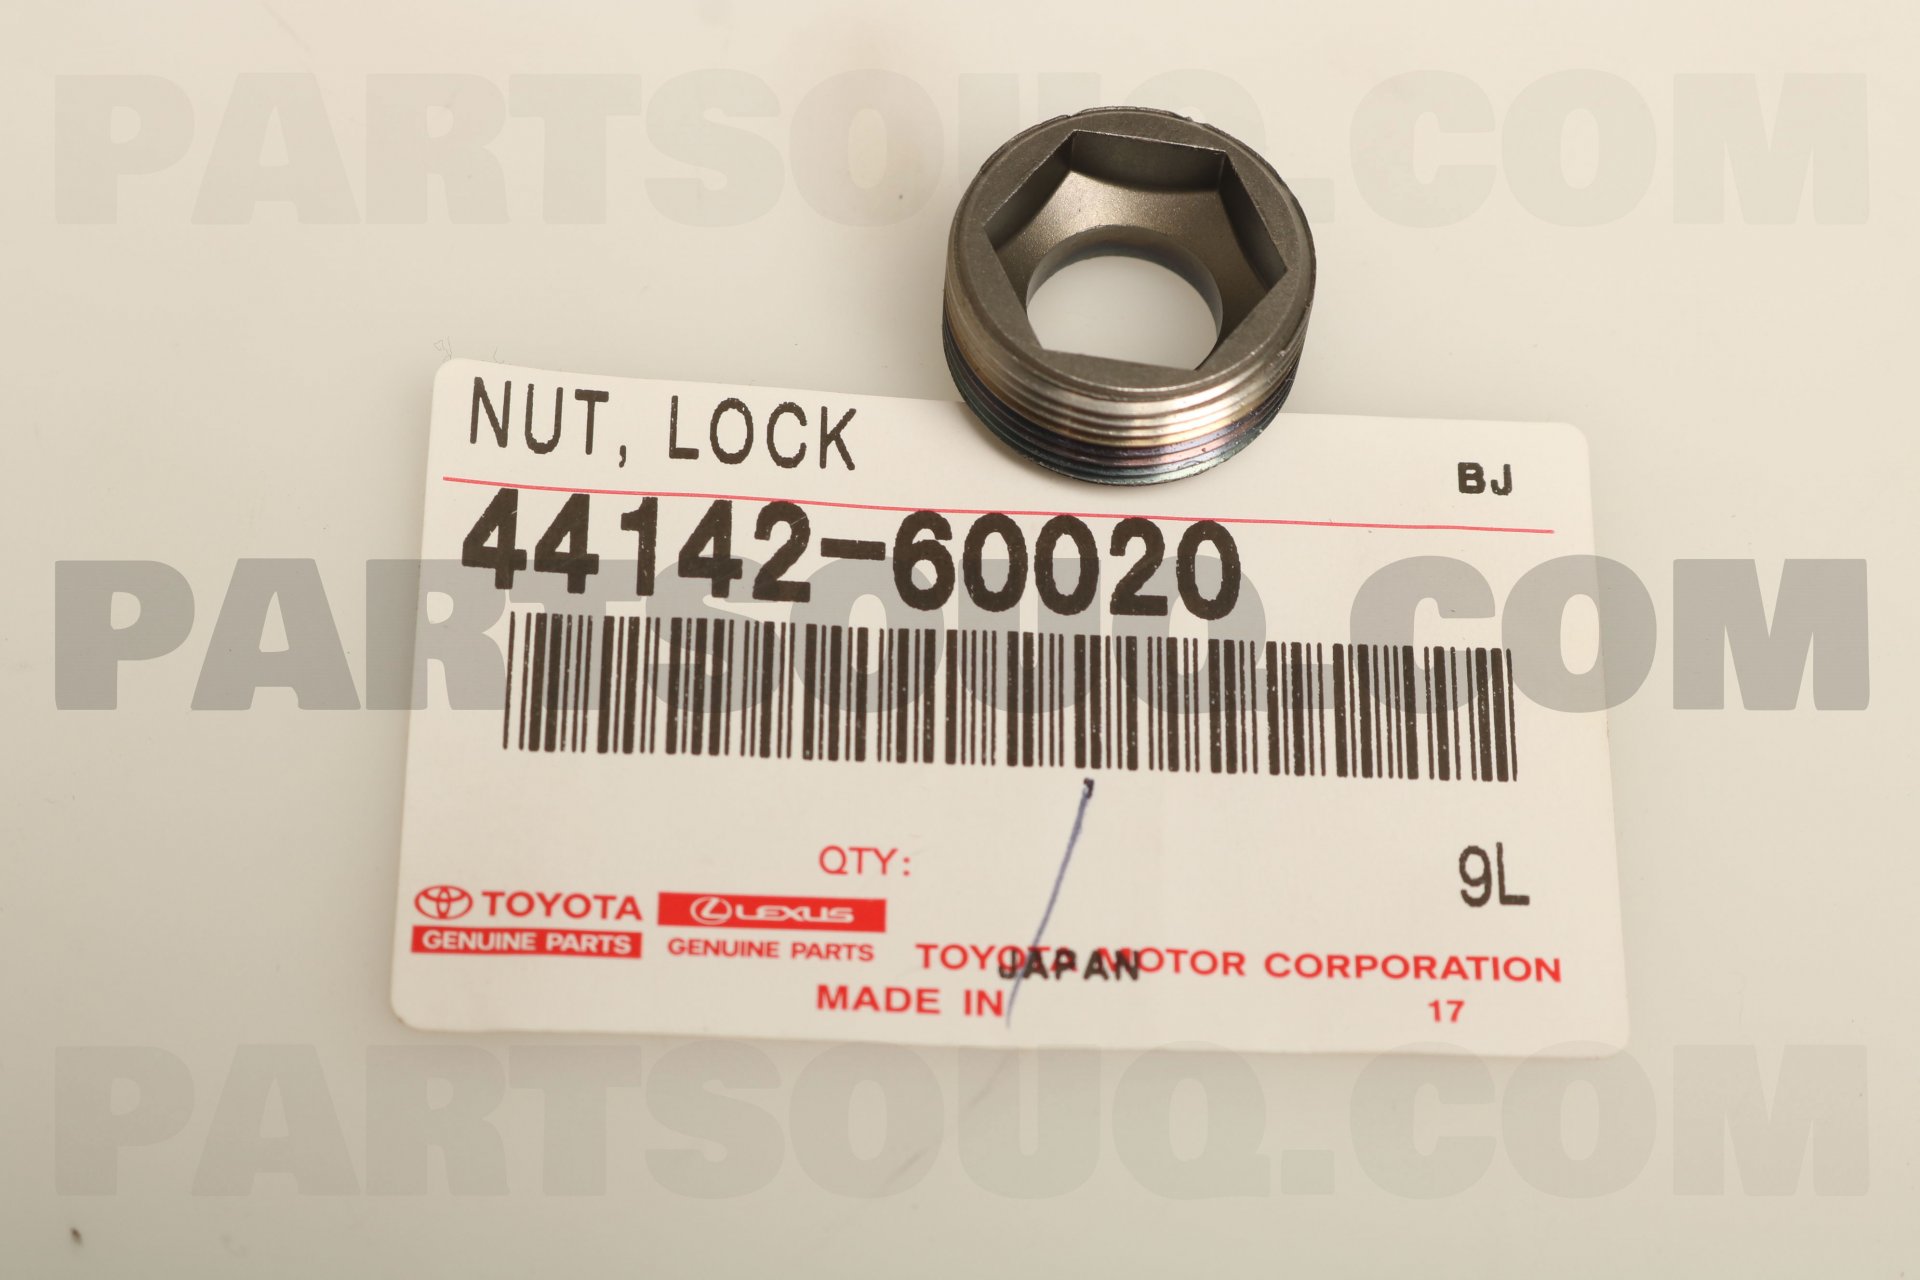 4414260020-stering nut lock.jpg